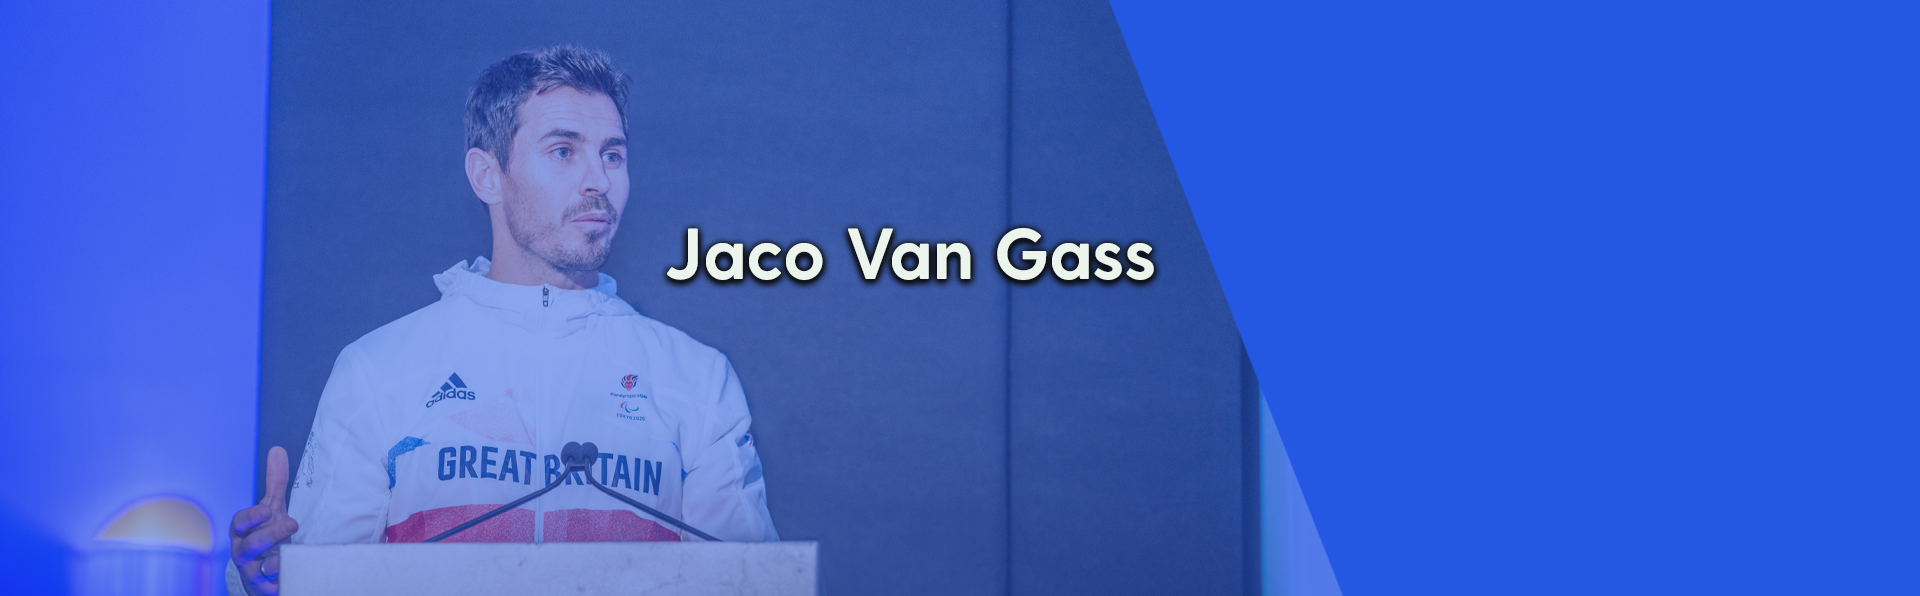 Congratulations to Jaco Van Gass, MBE!